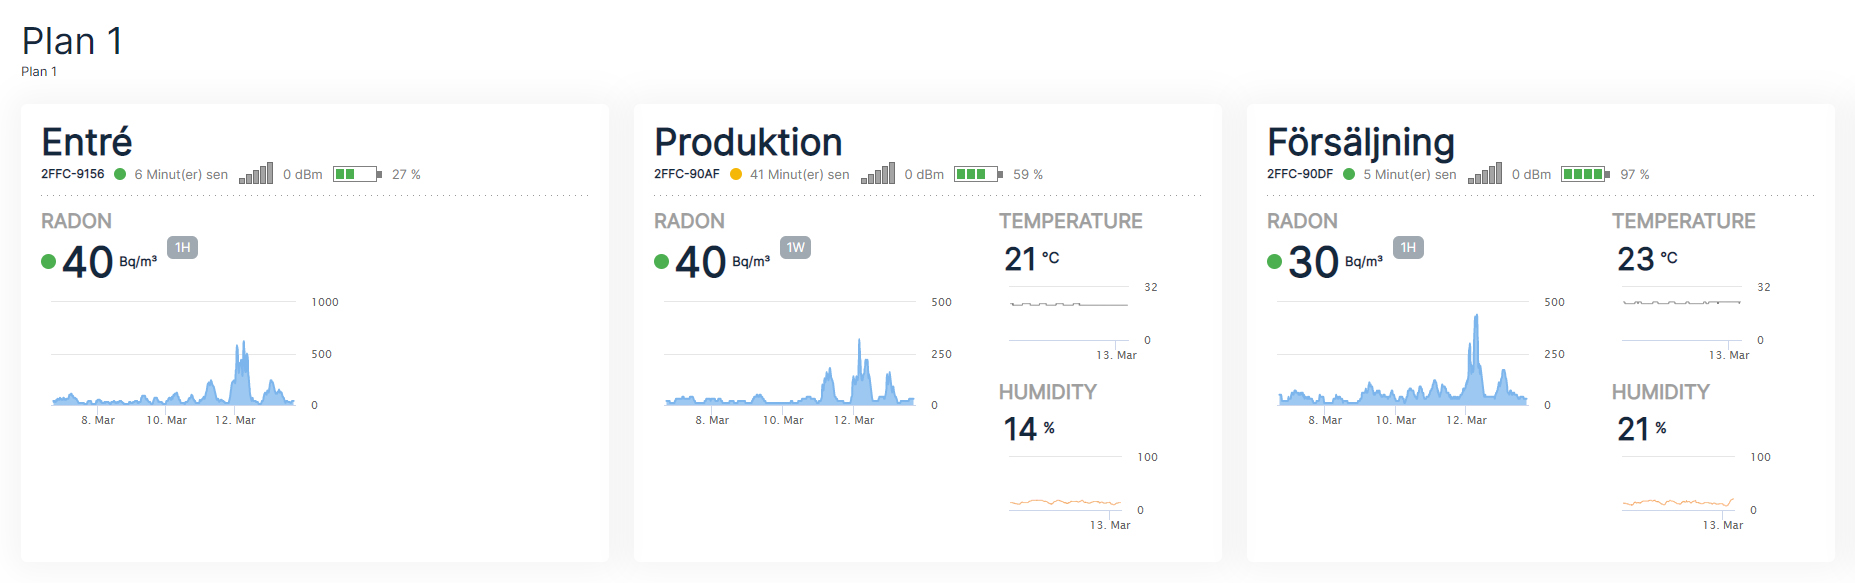 Ny dashboard visualiserar radonsituationen i fastigheter